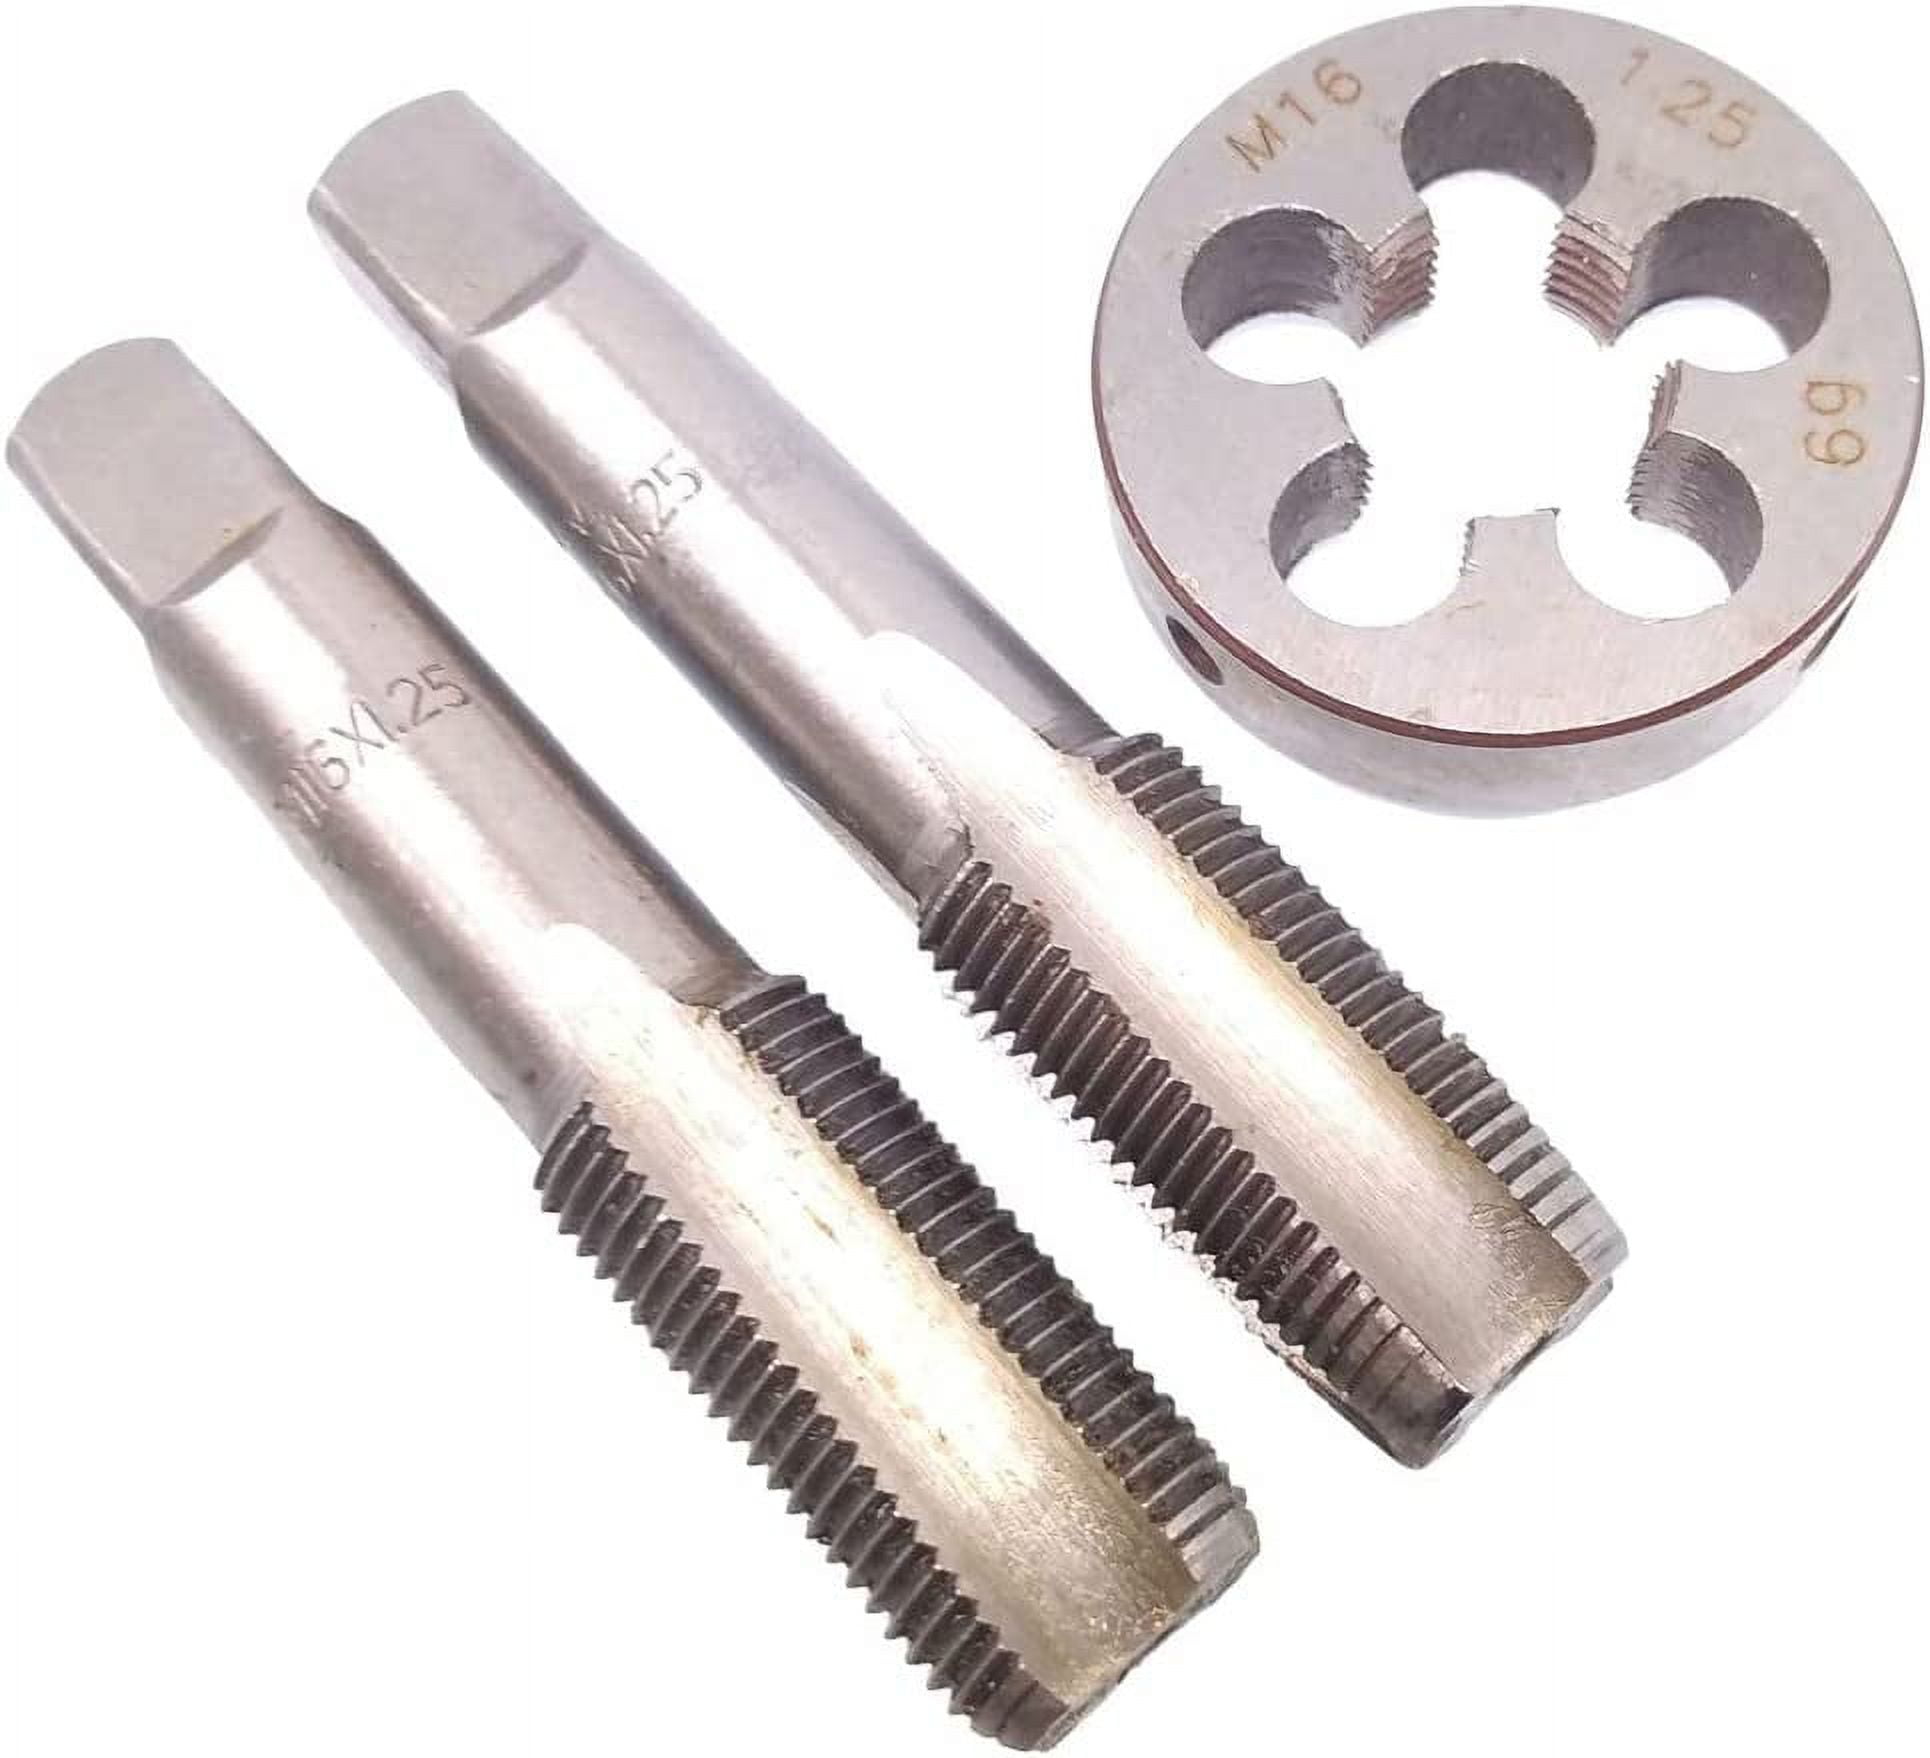 HHW - Thread cutter tool set in sheet steel box M3-M12